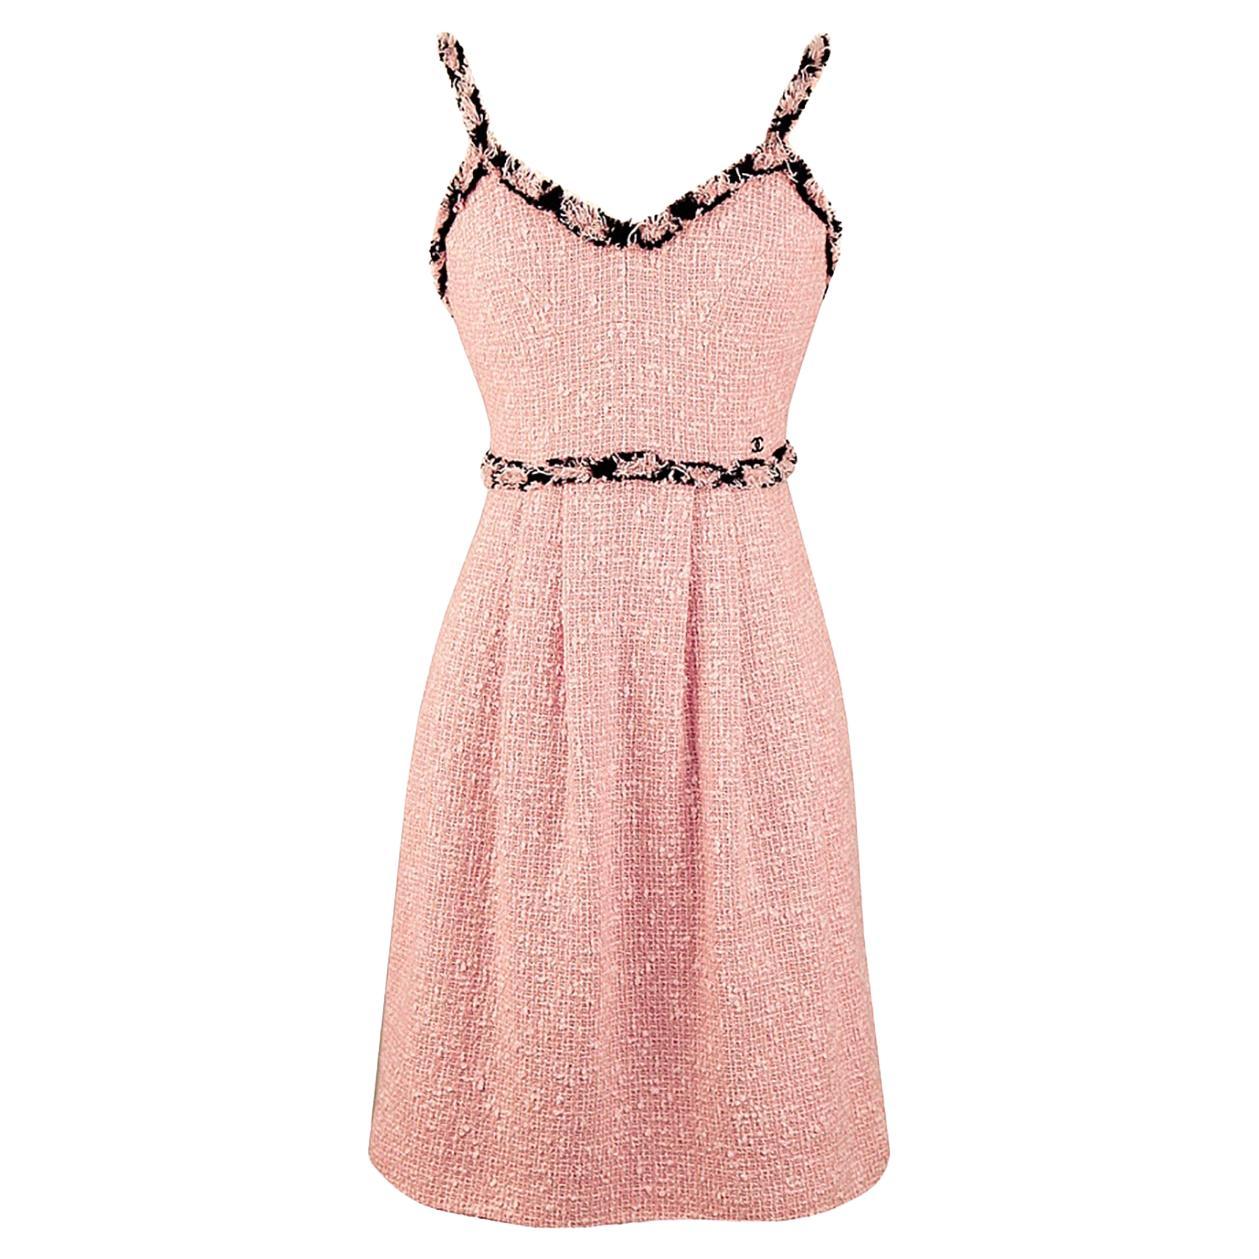 Chanel Eva Longoria Style Famous Pastel Pink Tweed Dress For Sale